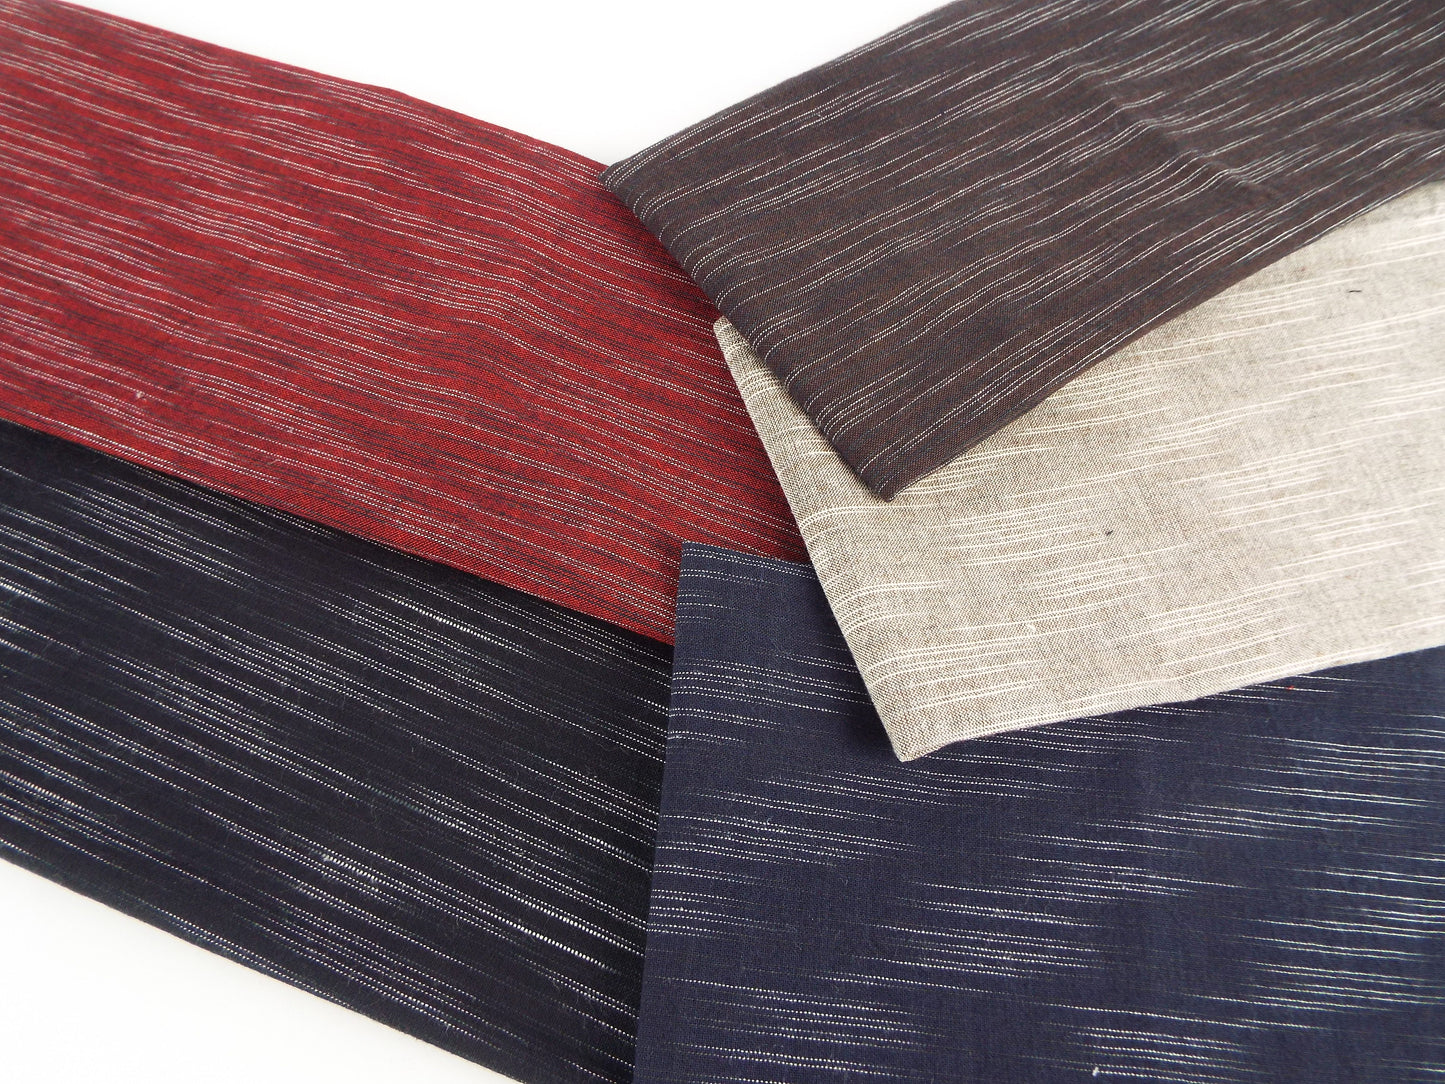 Kameda striped cotton fabric ordinary ground # 5 BDFHJ 5 patterns